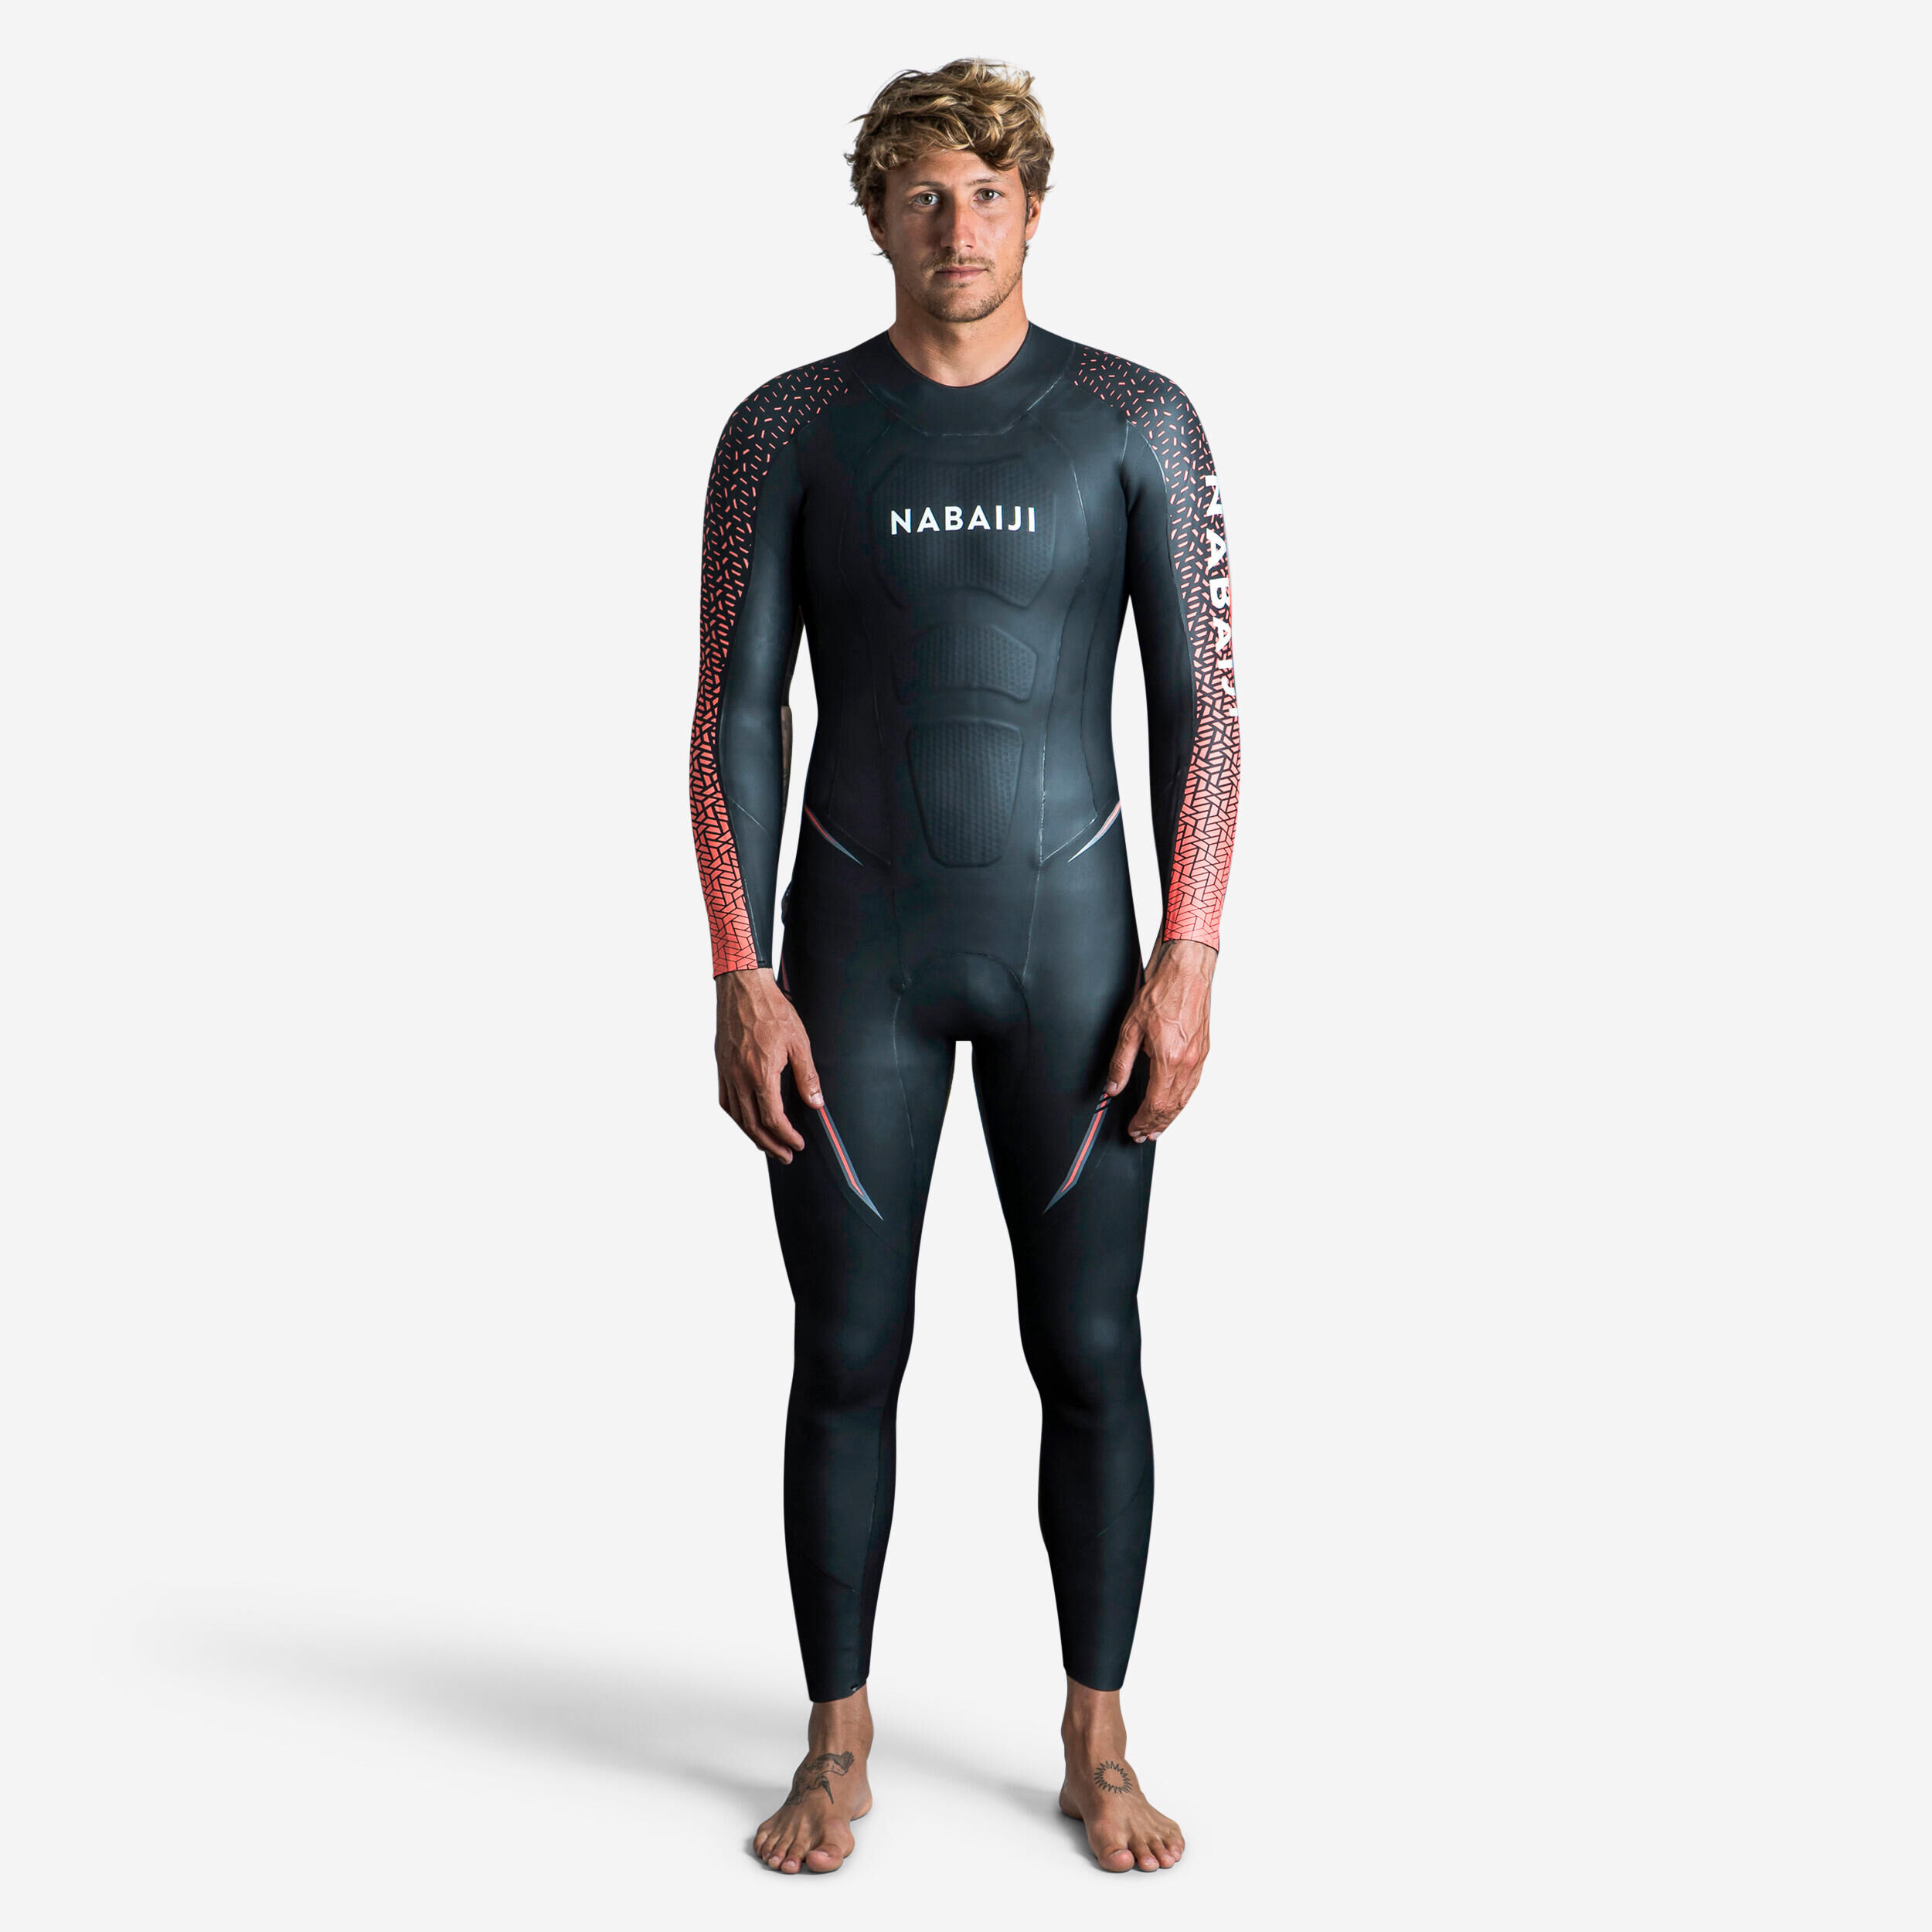 Men's Alliance SwimRun Wetsuit for Open Water Swimming